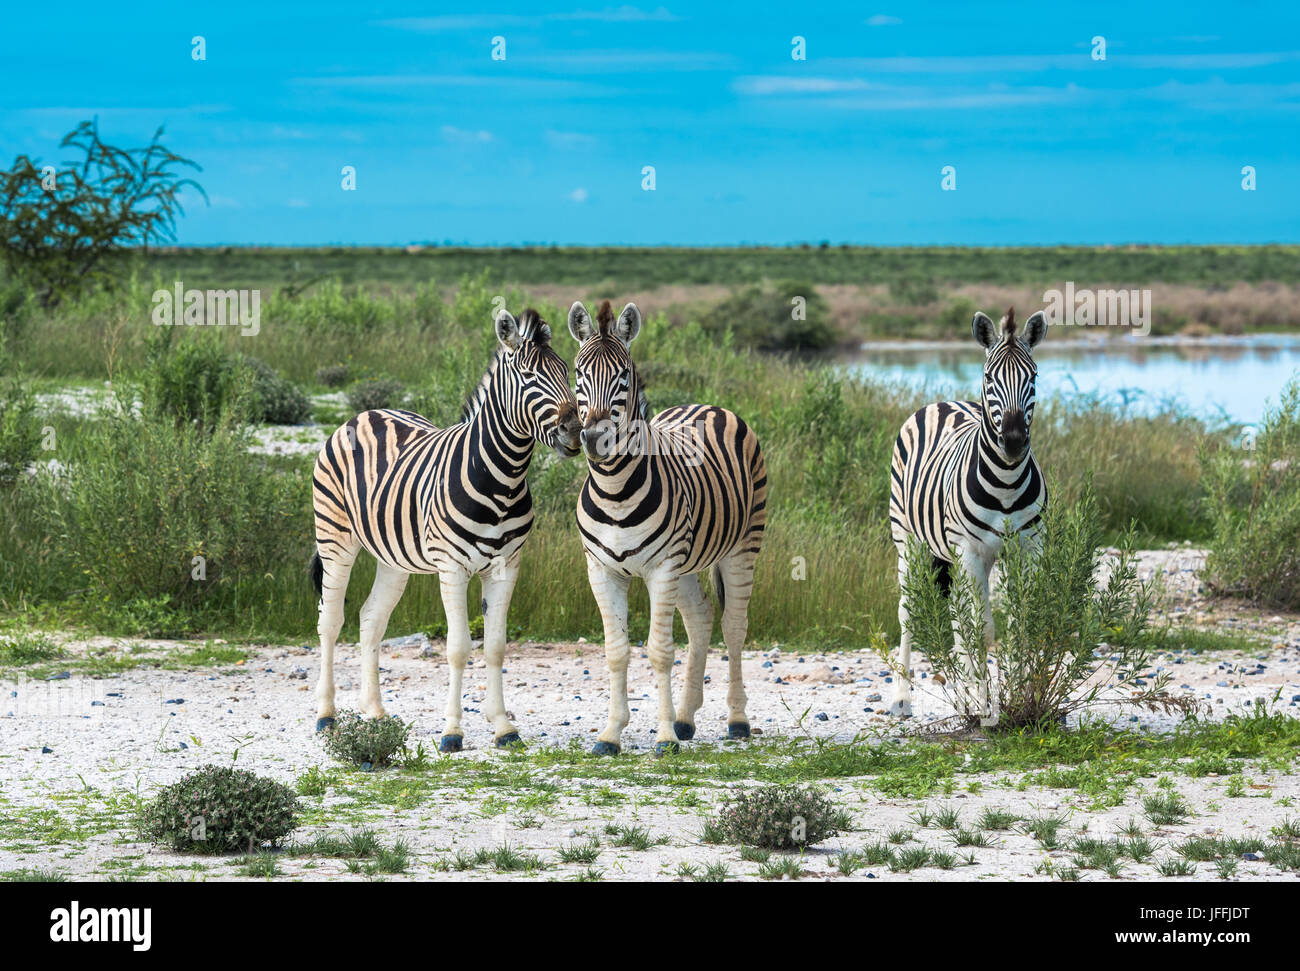 Zebras in Etosha national park, Namibia Stock Photo